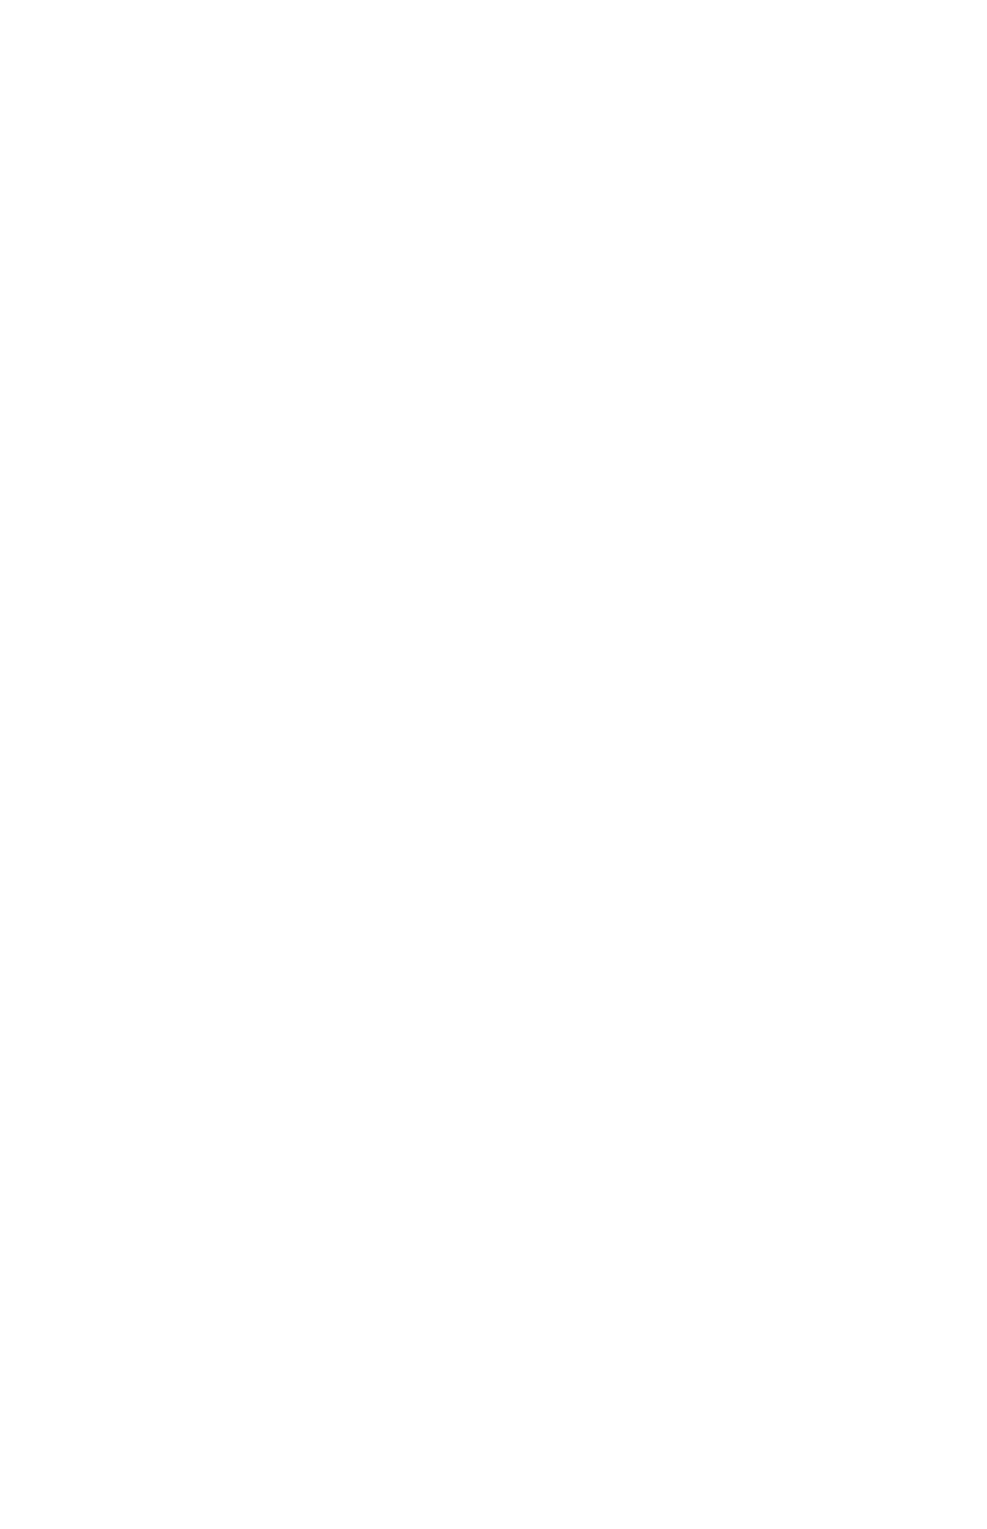 Otter Tail logo for dark backgrounds (transparent PNG)